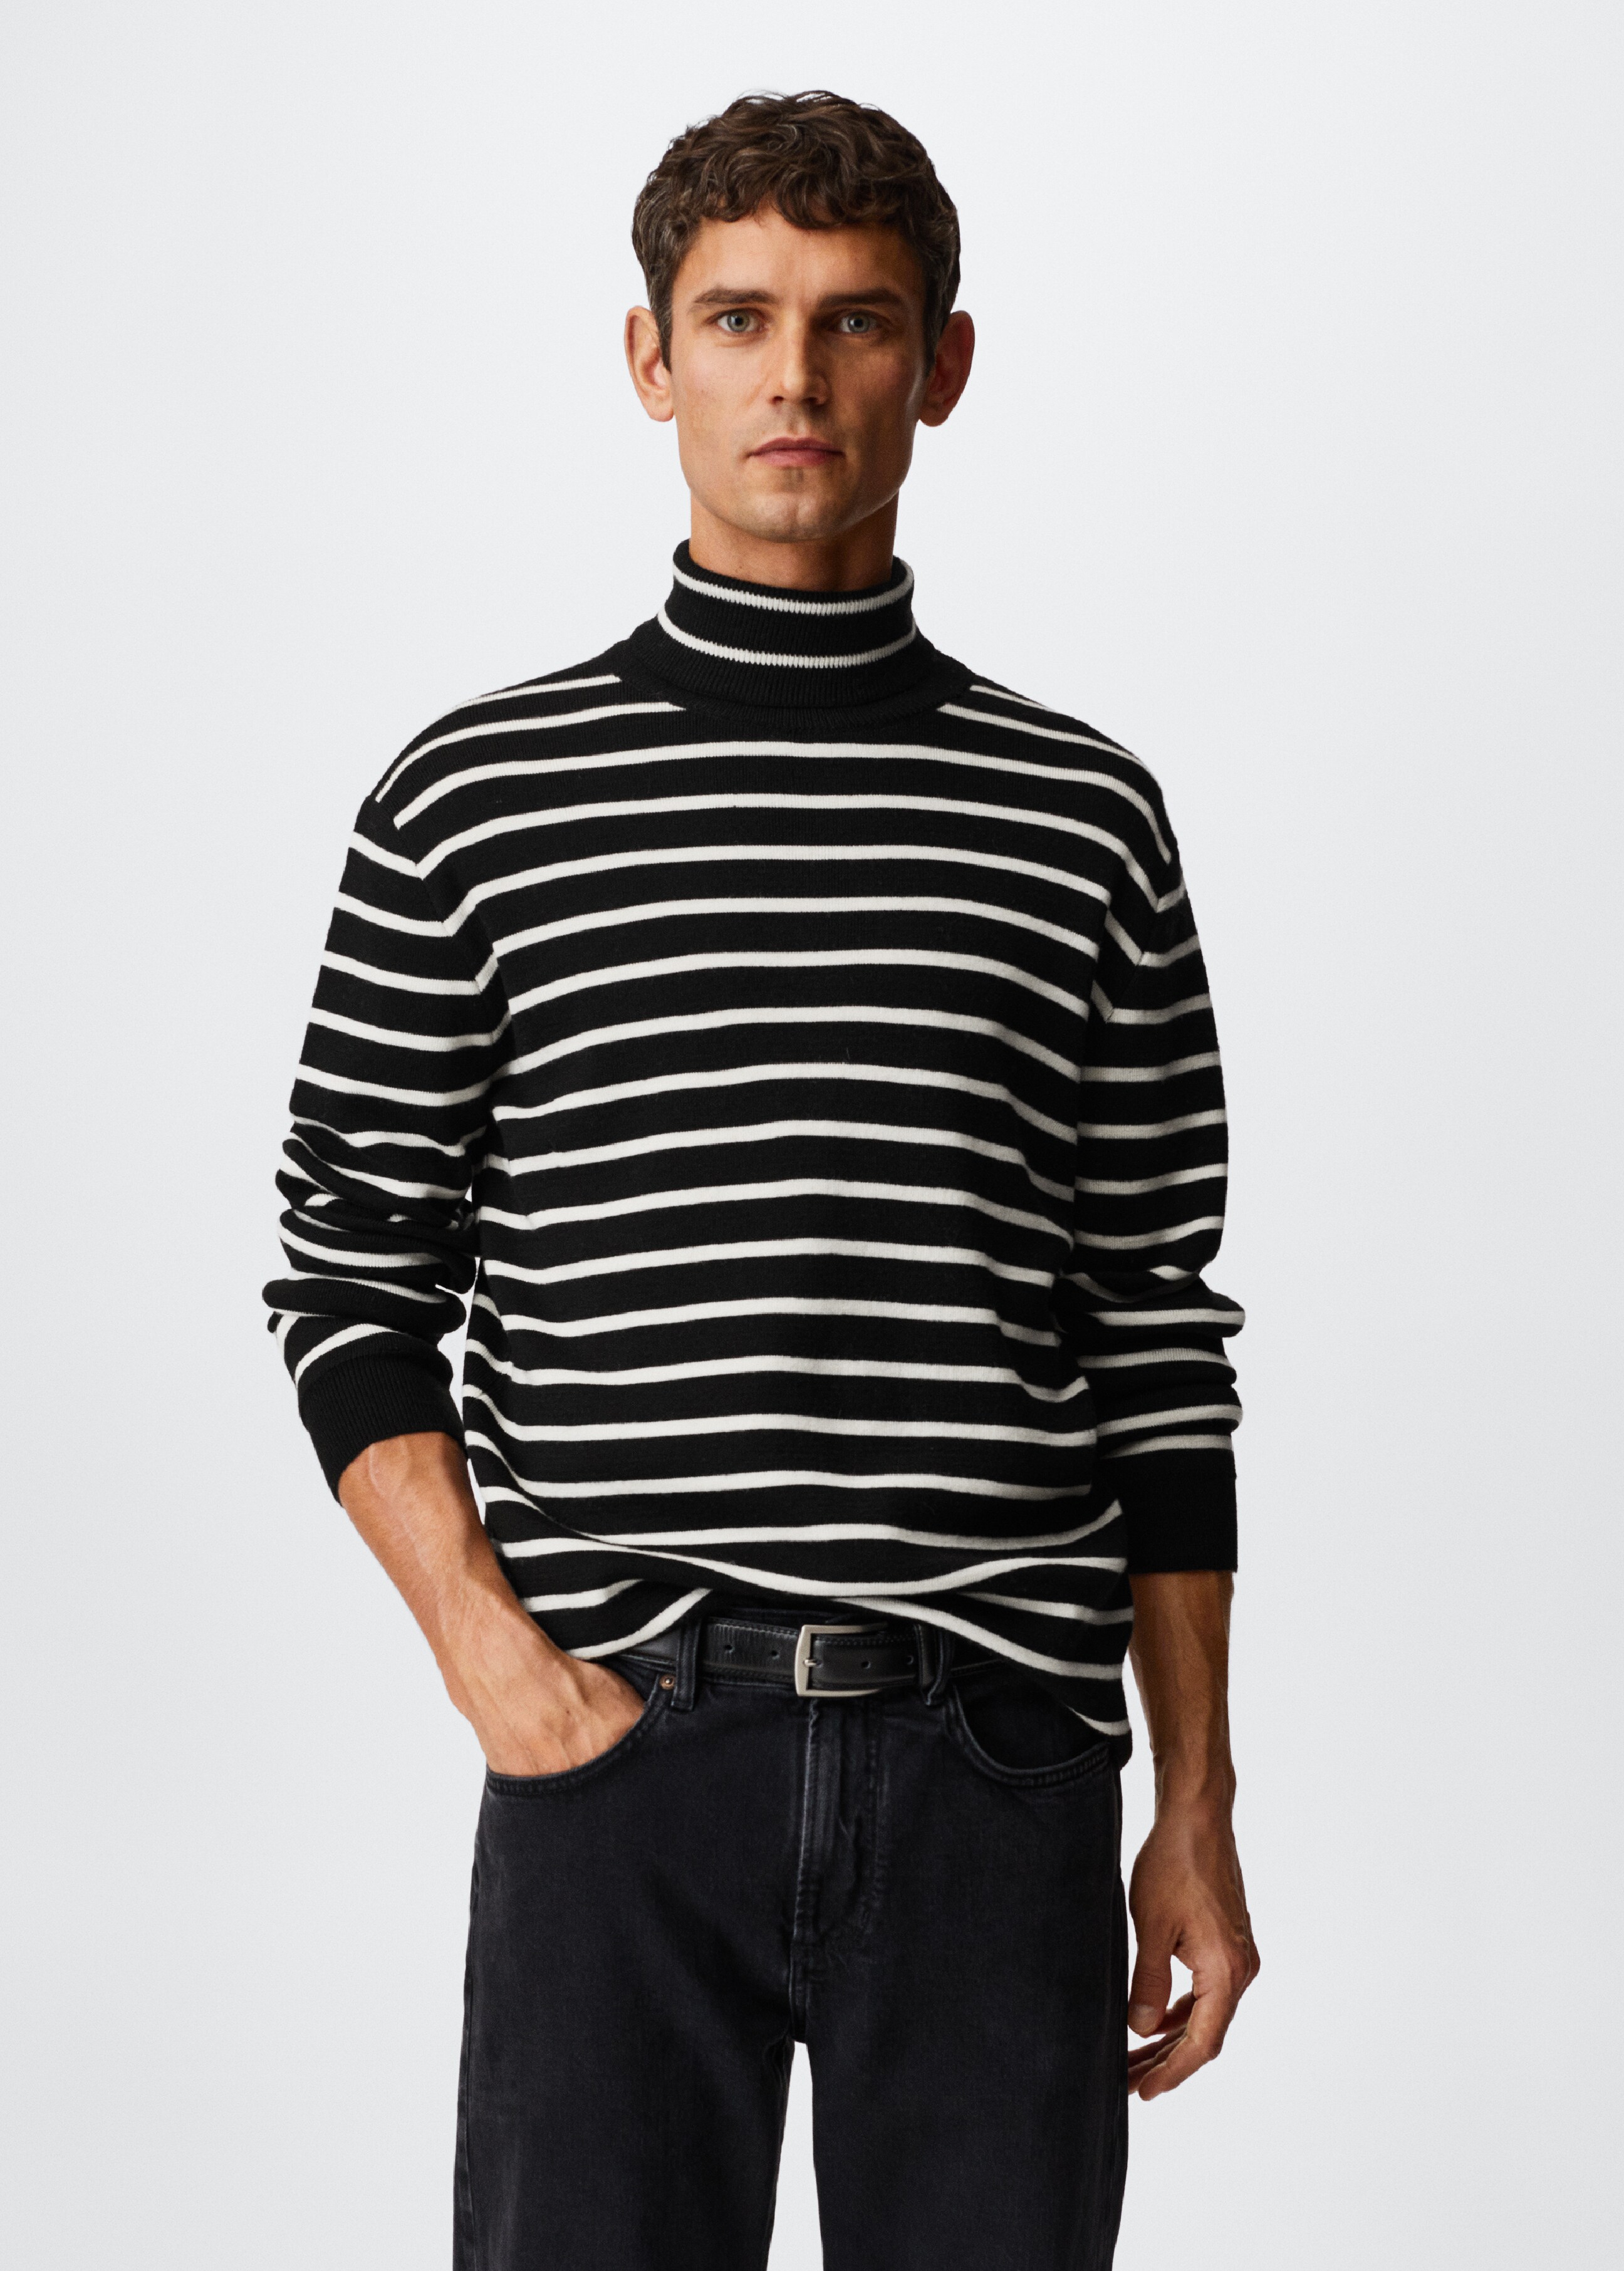 Stand-collar striped sweater - Medium plane